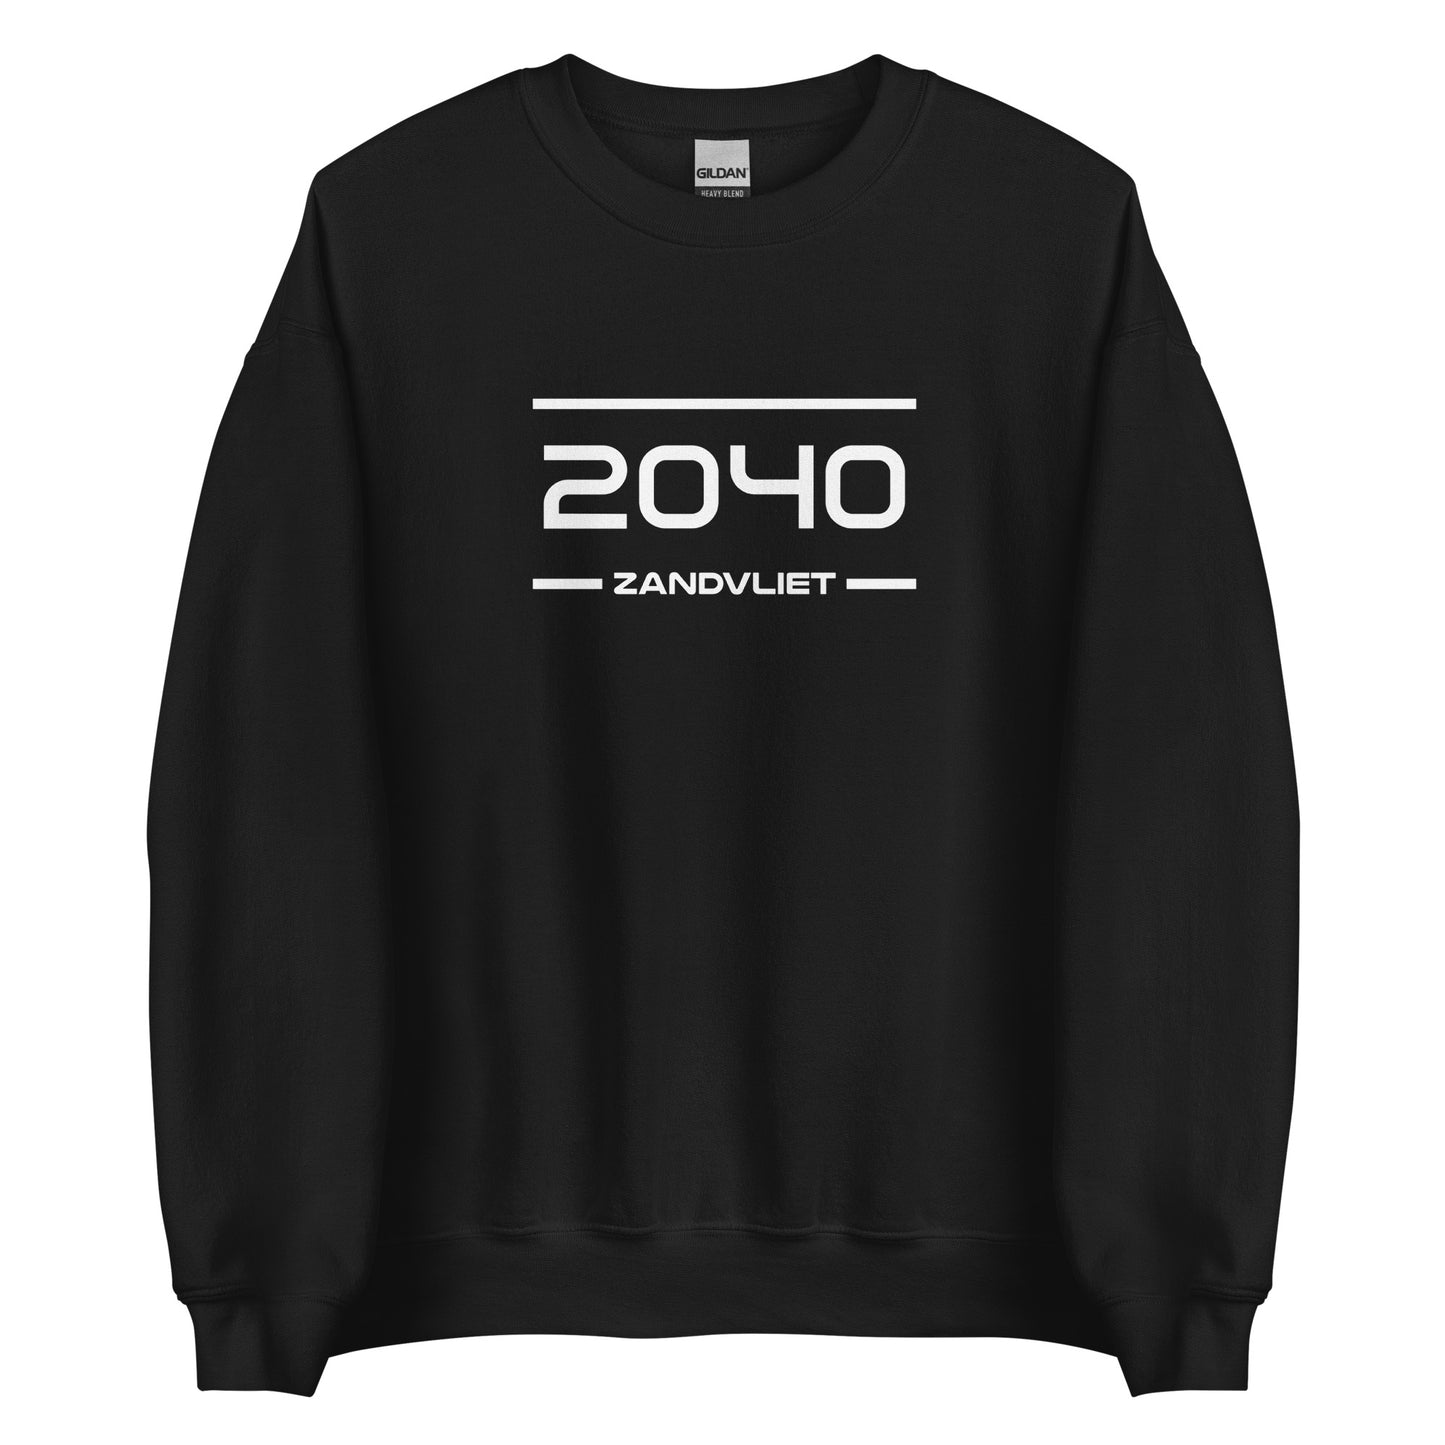 Sweater - 2040 - Zandvliet (M/V)